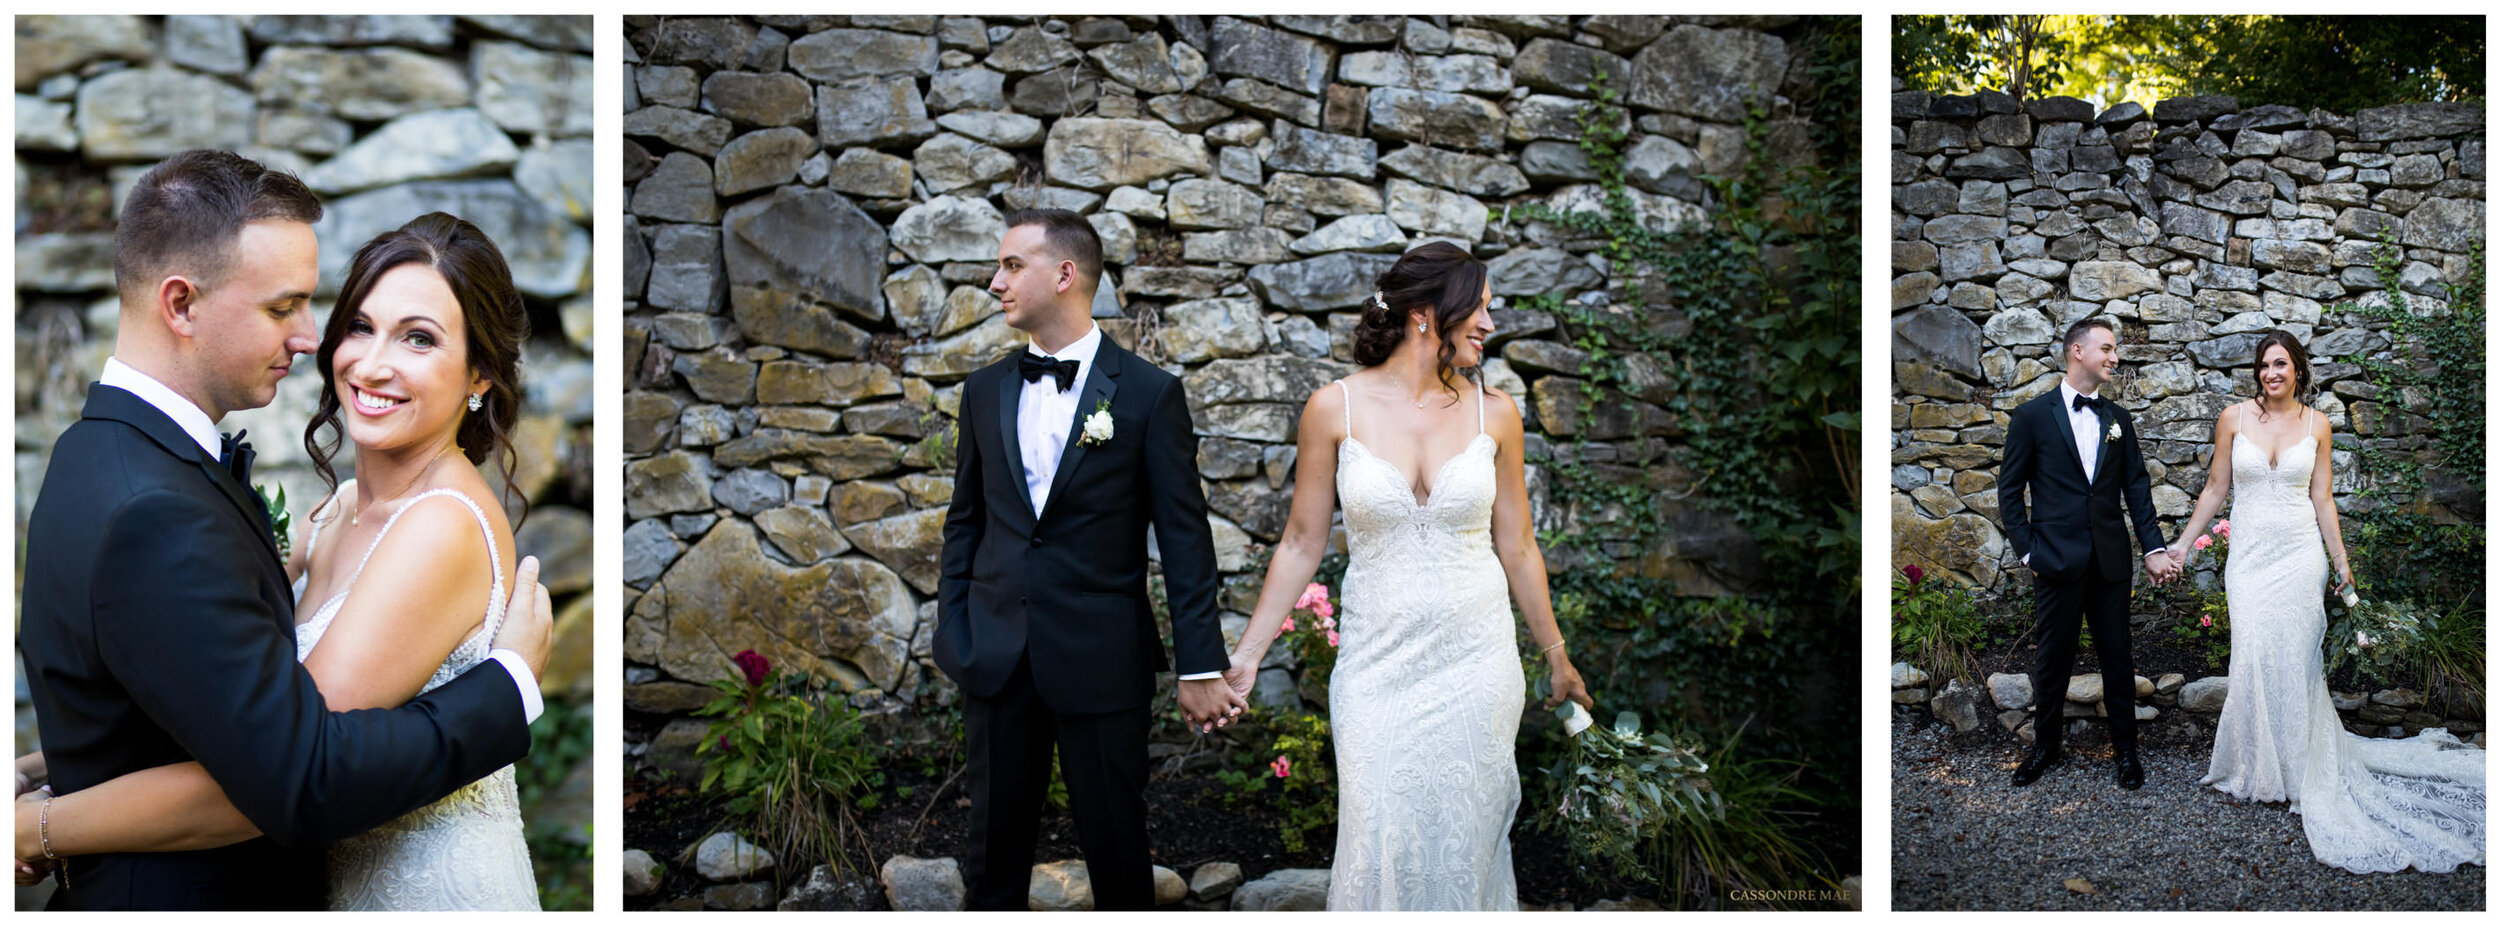 Cassondre Mae Photography Crossed Keys Estate Weddings  23.jpg